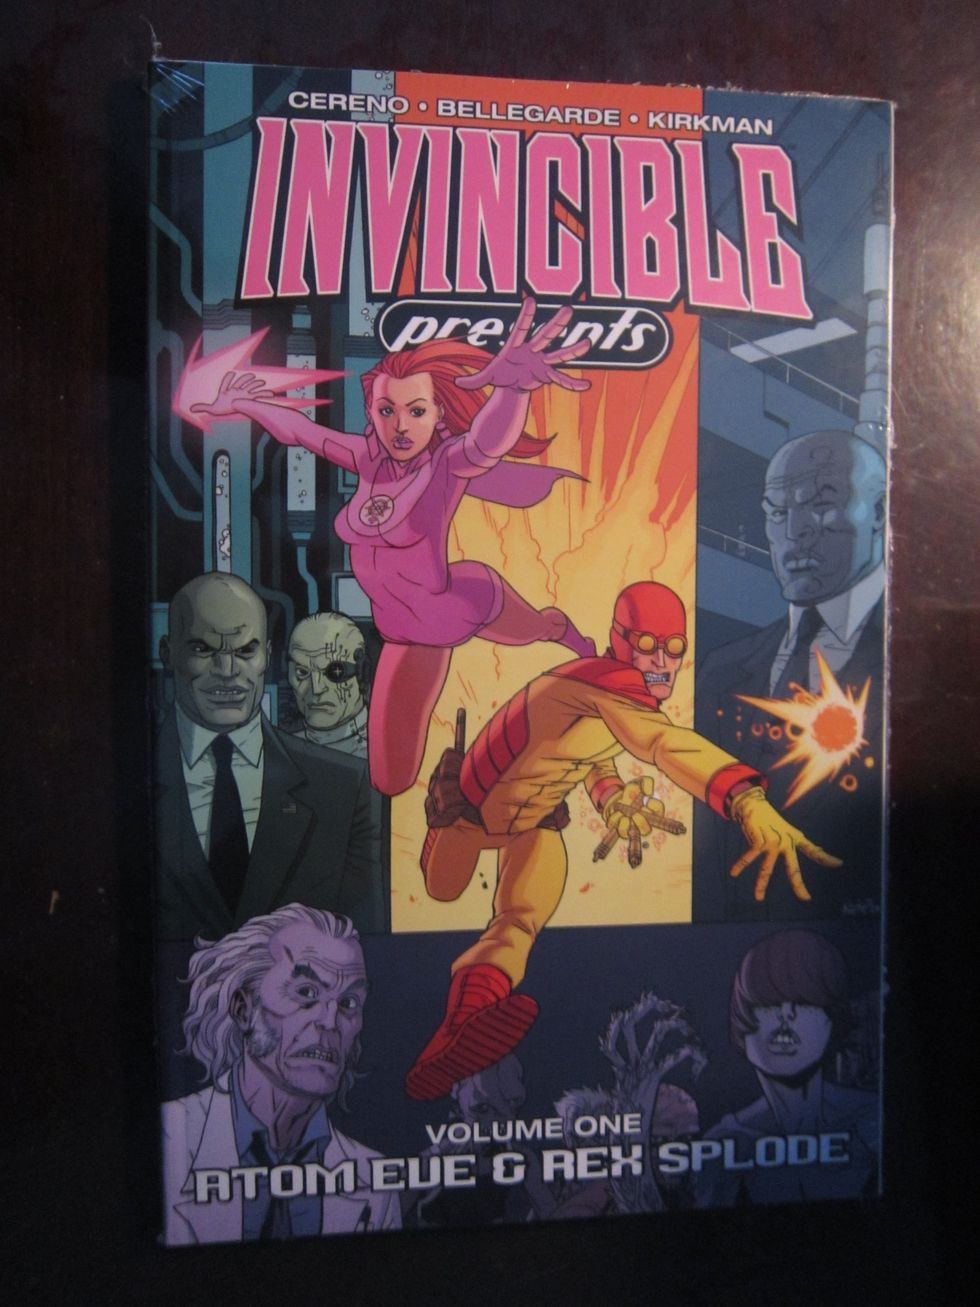 Invincible's Robert Kirkman on Season 2, the Atom Eve Ep, and